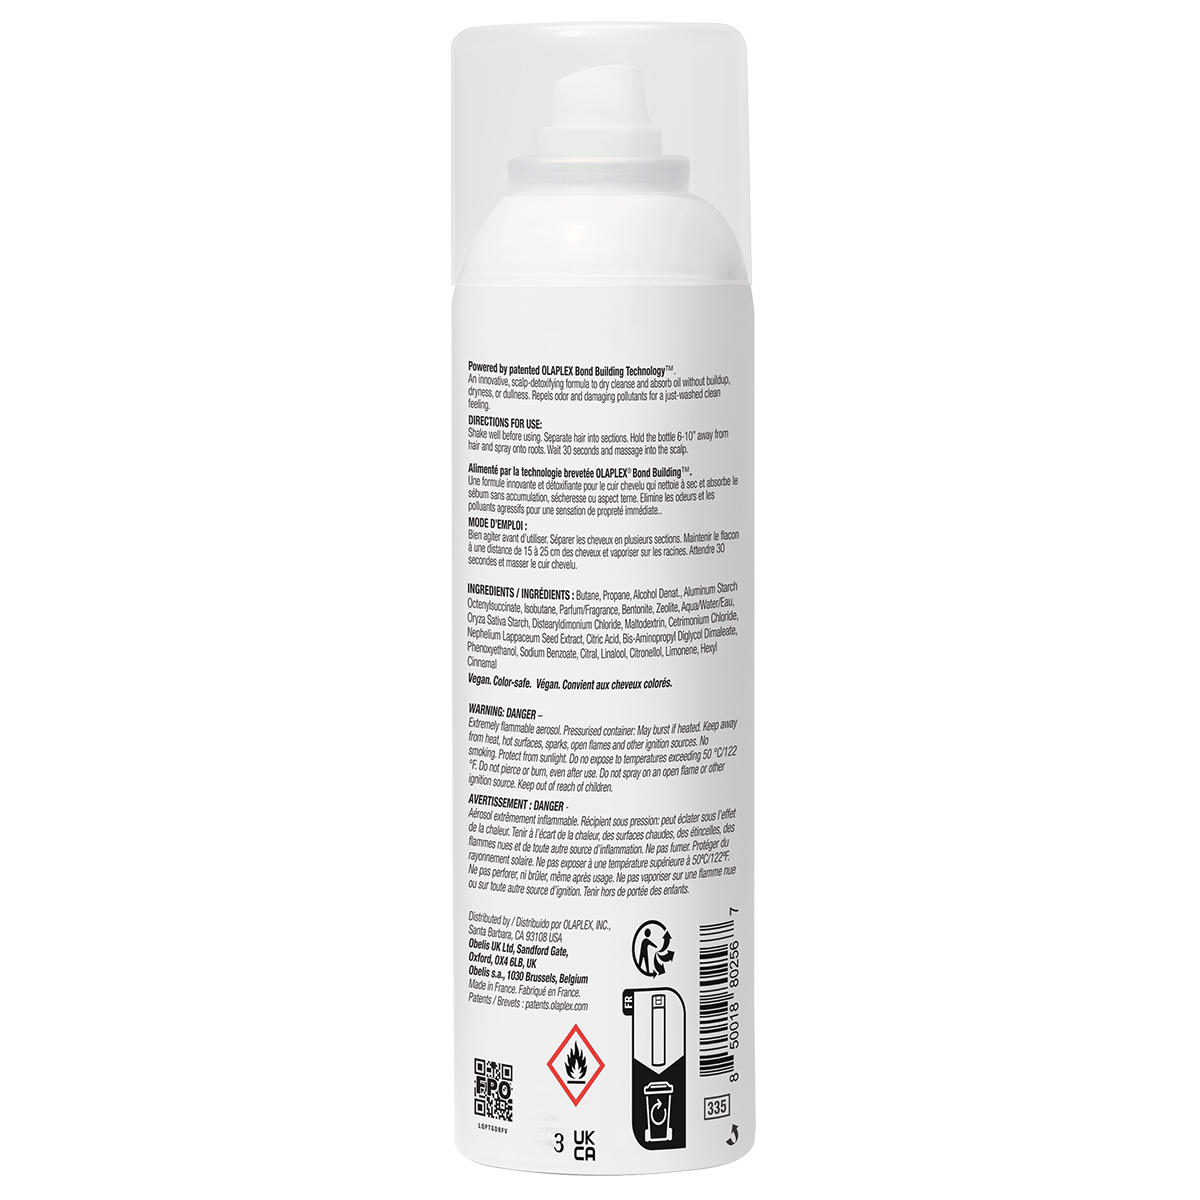 Olaplex Clean Volume Detox Dry Shampoo No. 4D 250 ml - 2